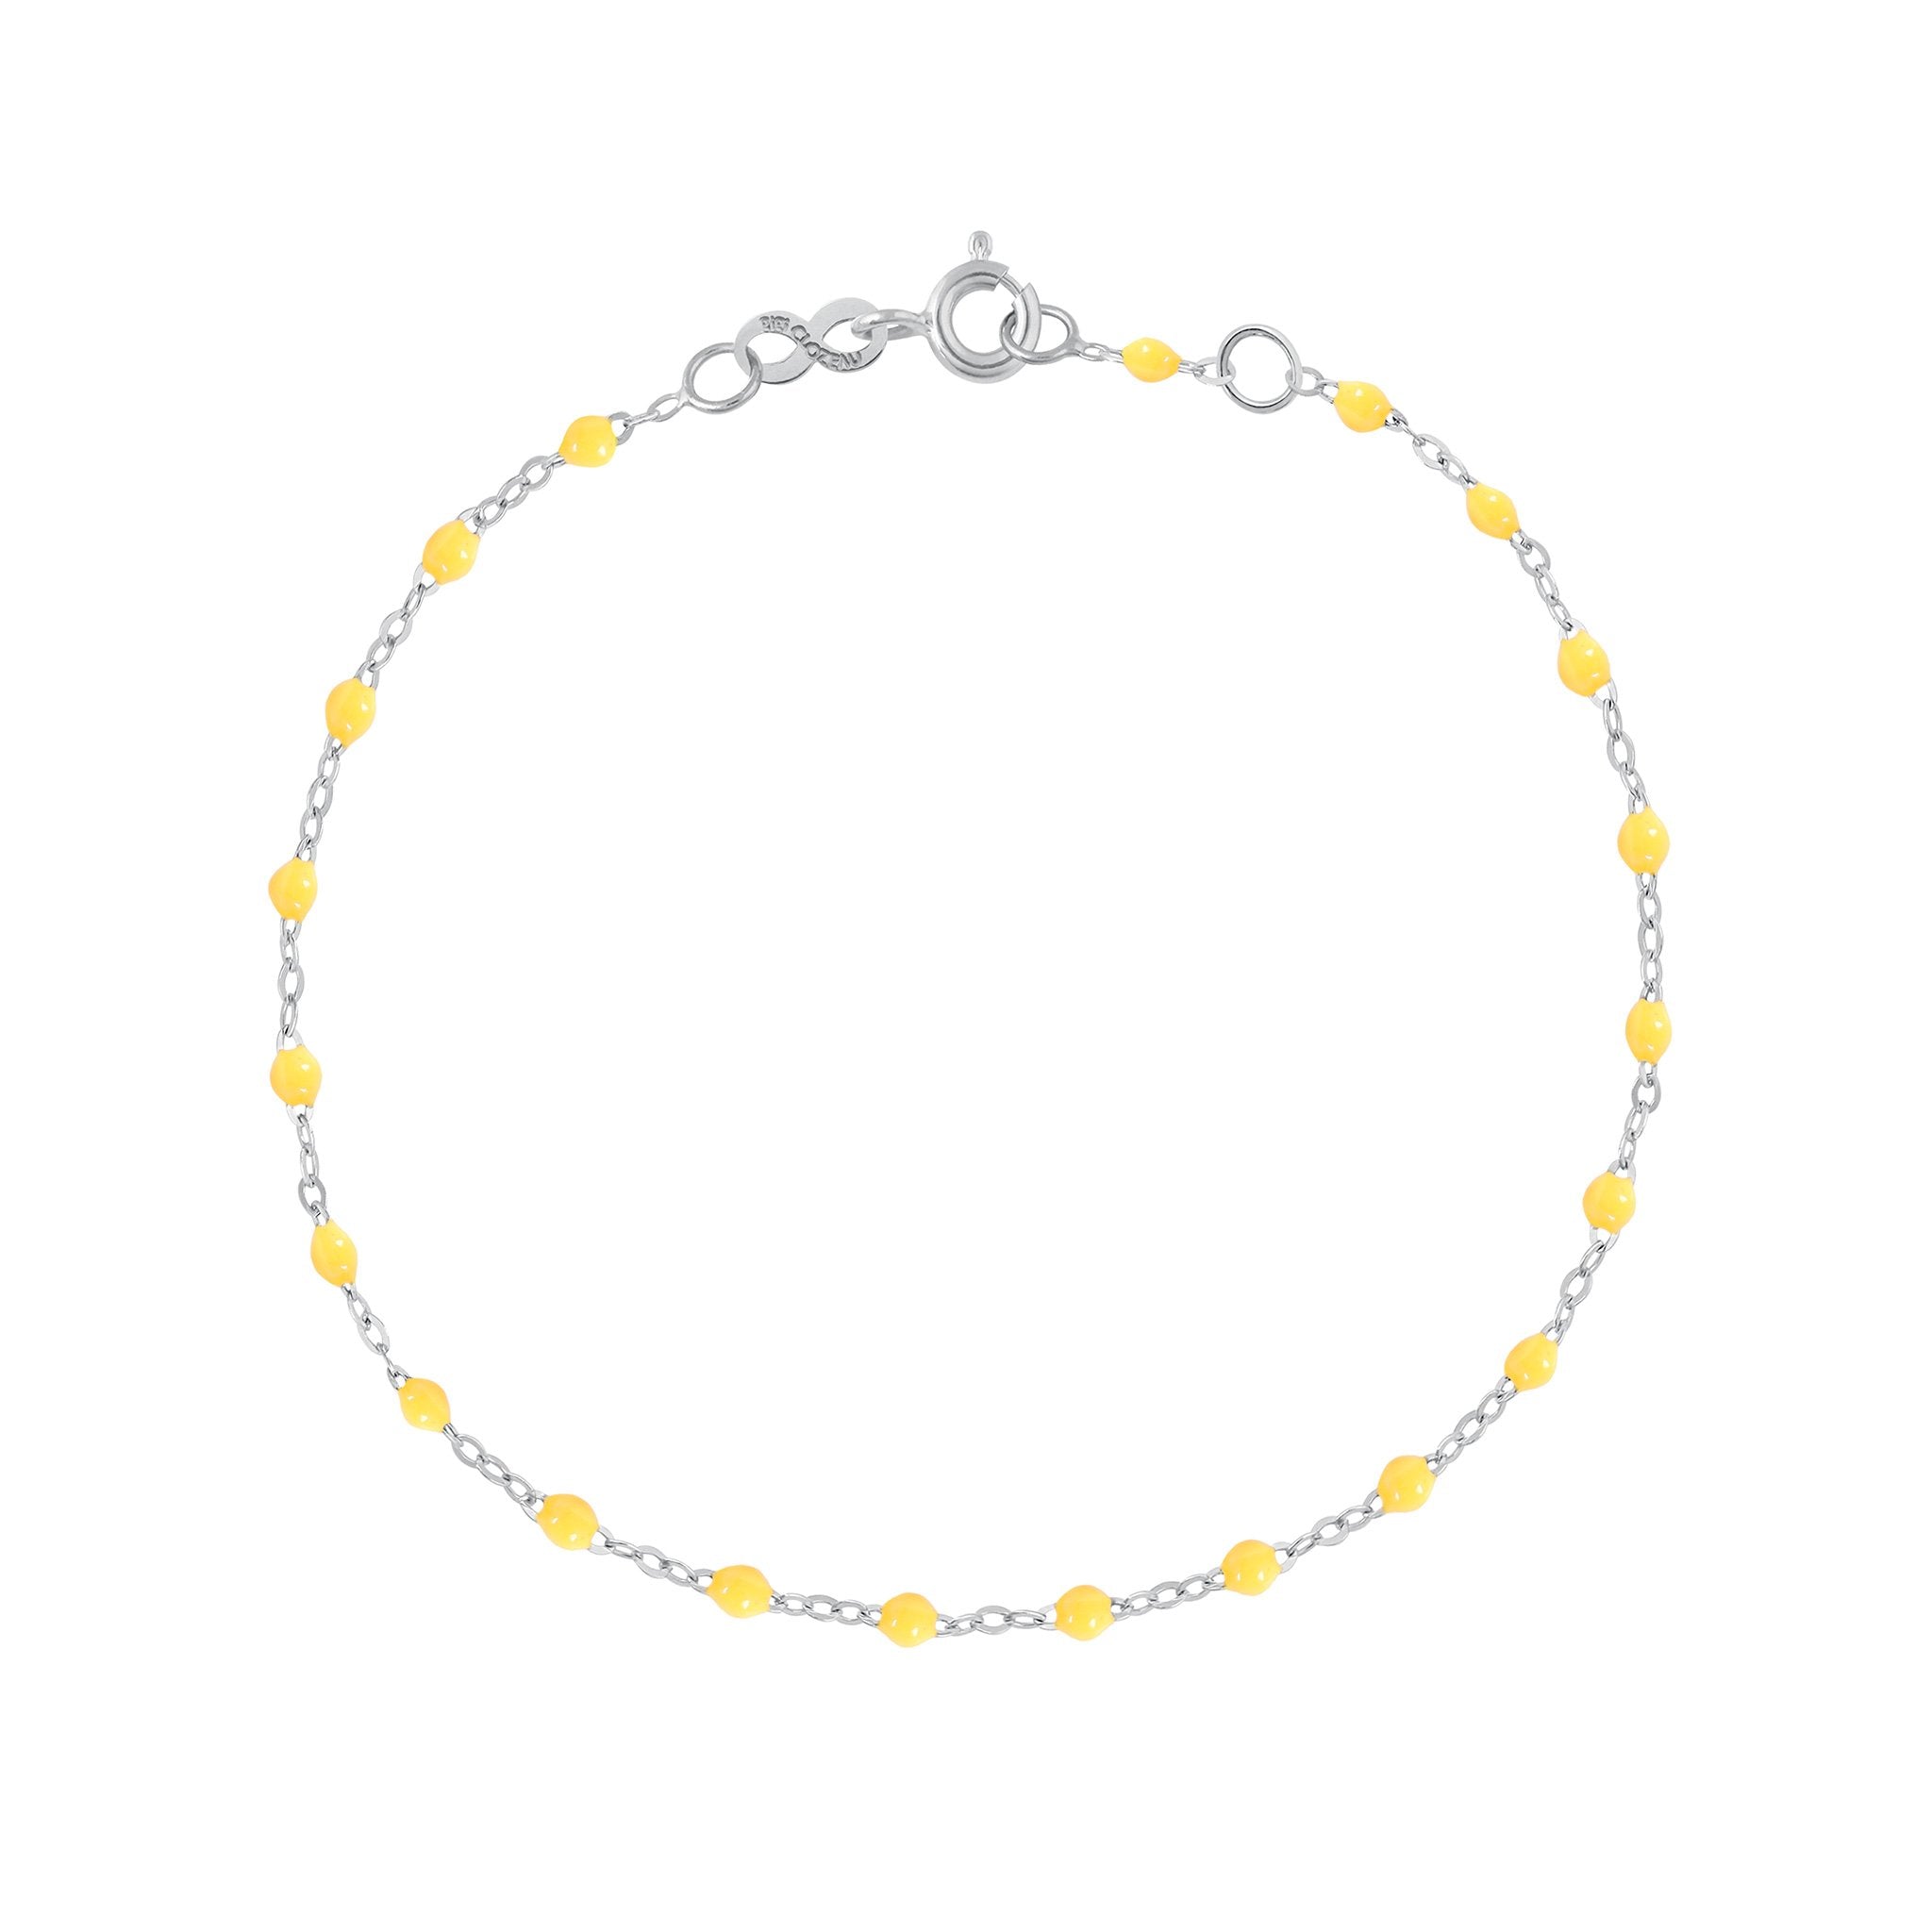 Bracelet citron Classique Gigi, or blanc, 15 cm classique gigi Référence :  b3gi001g4715xx -1